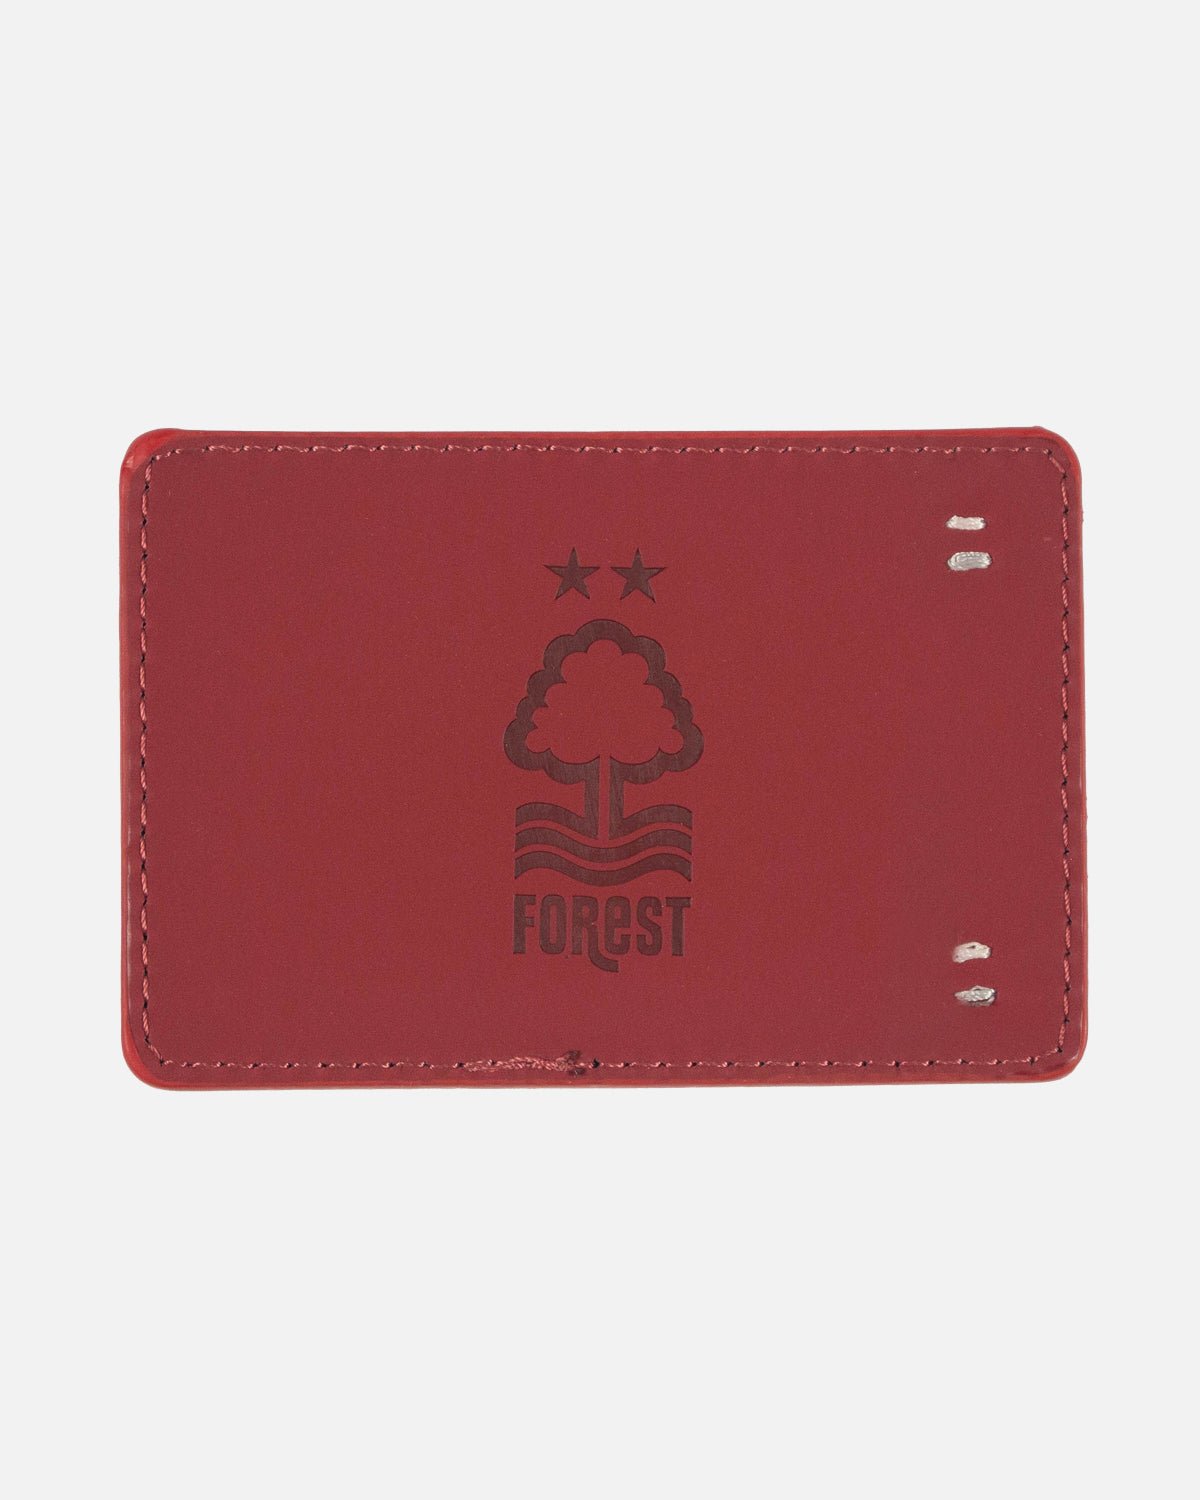 NFFC Ultimate Leather Card Holder - Nottingham Forest FC